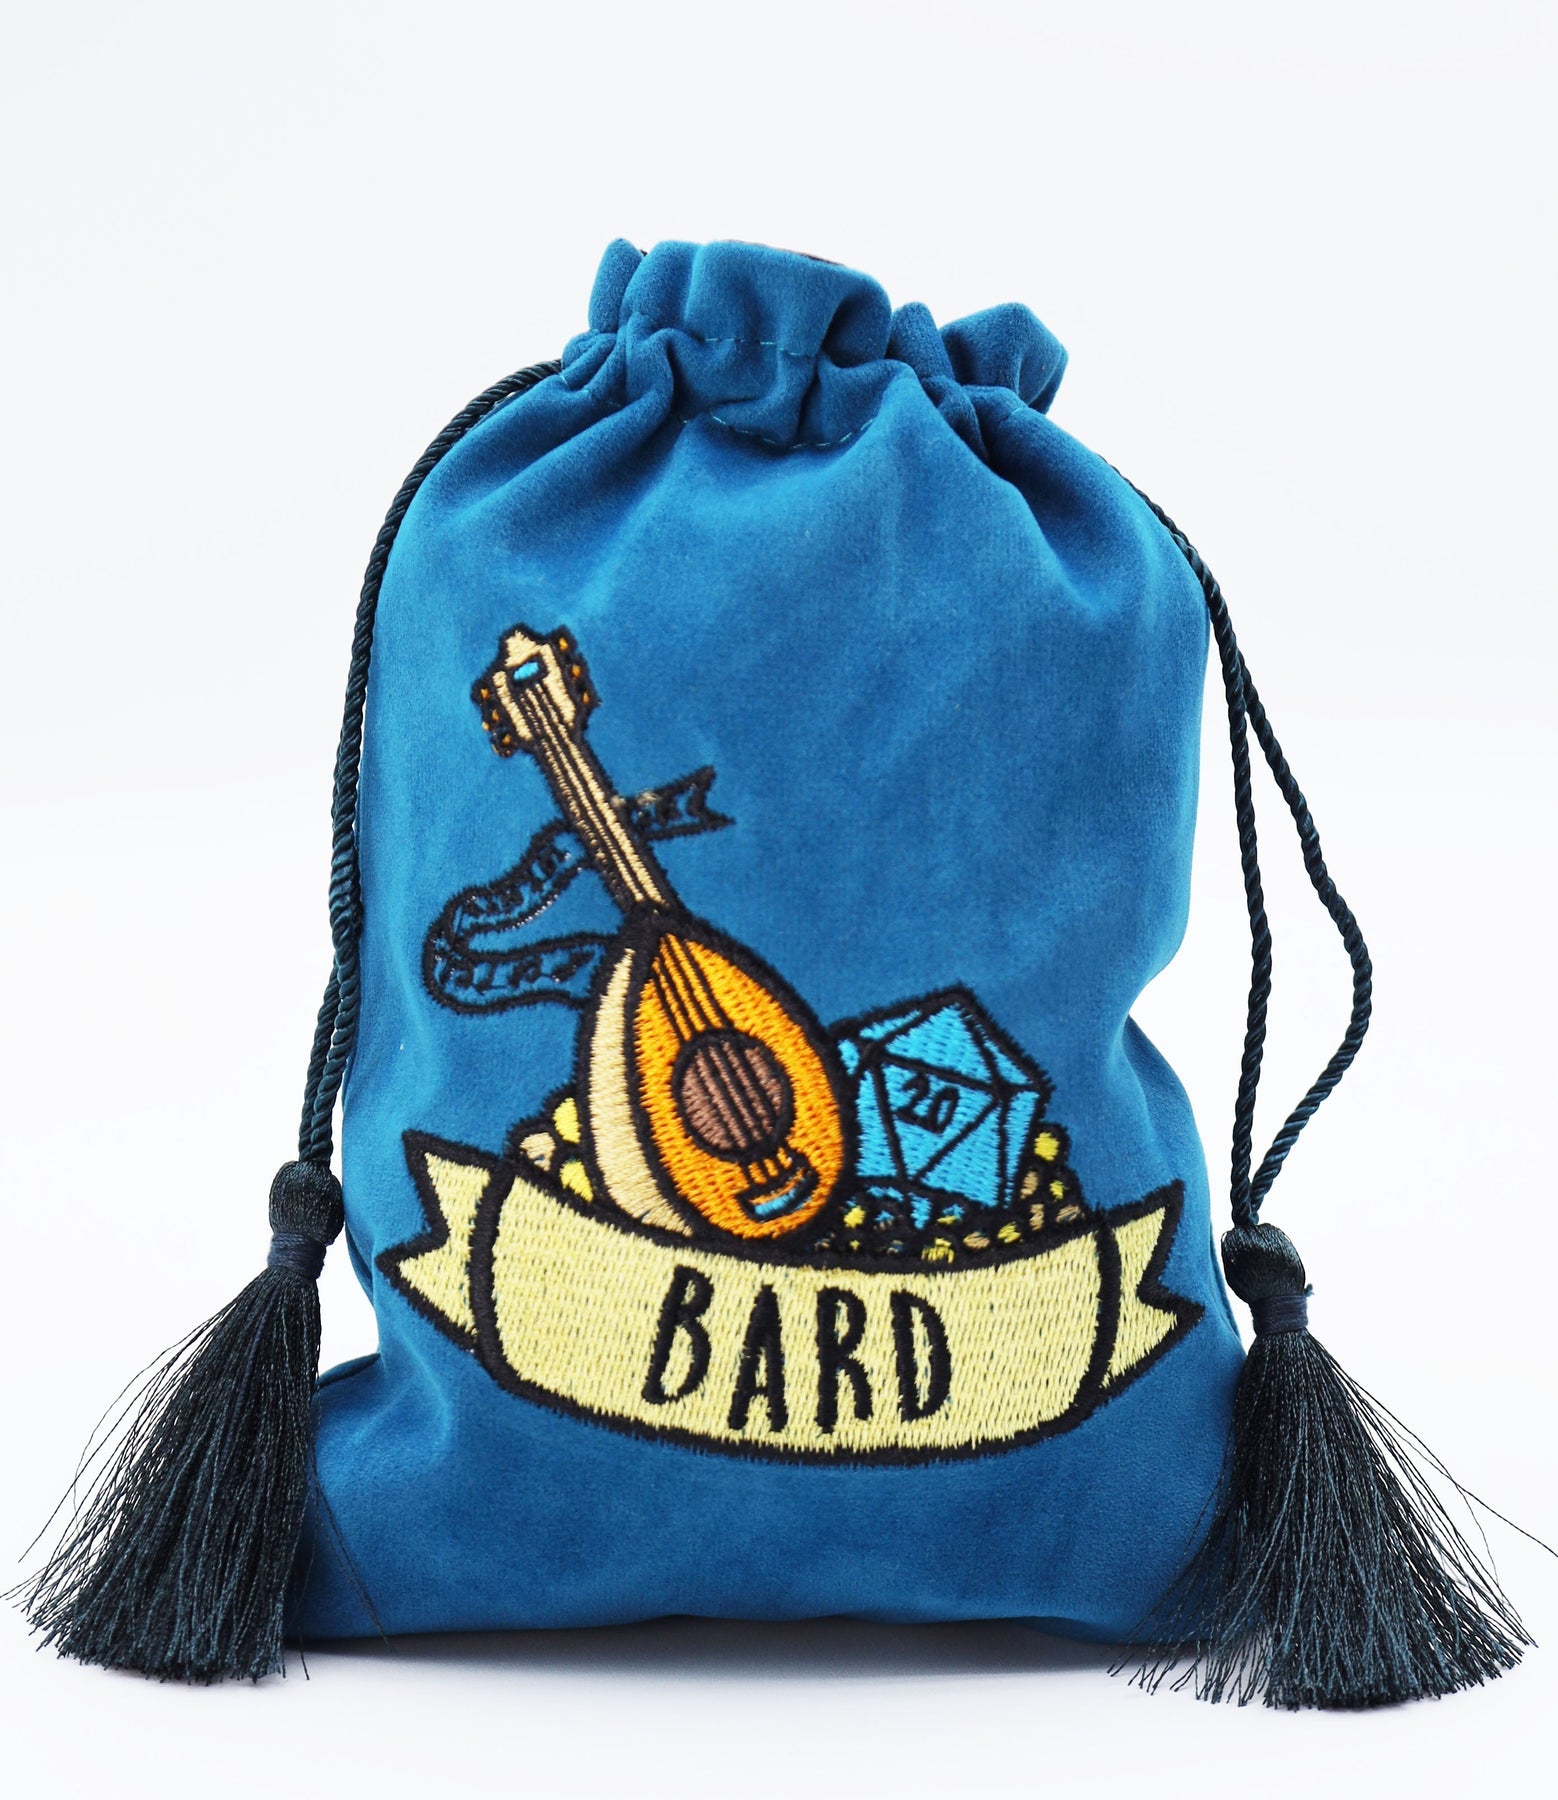 Bard Dice Bag